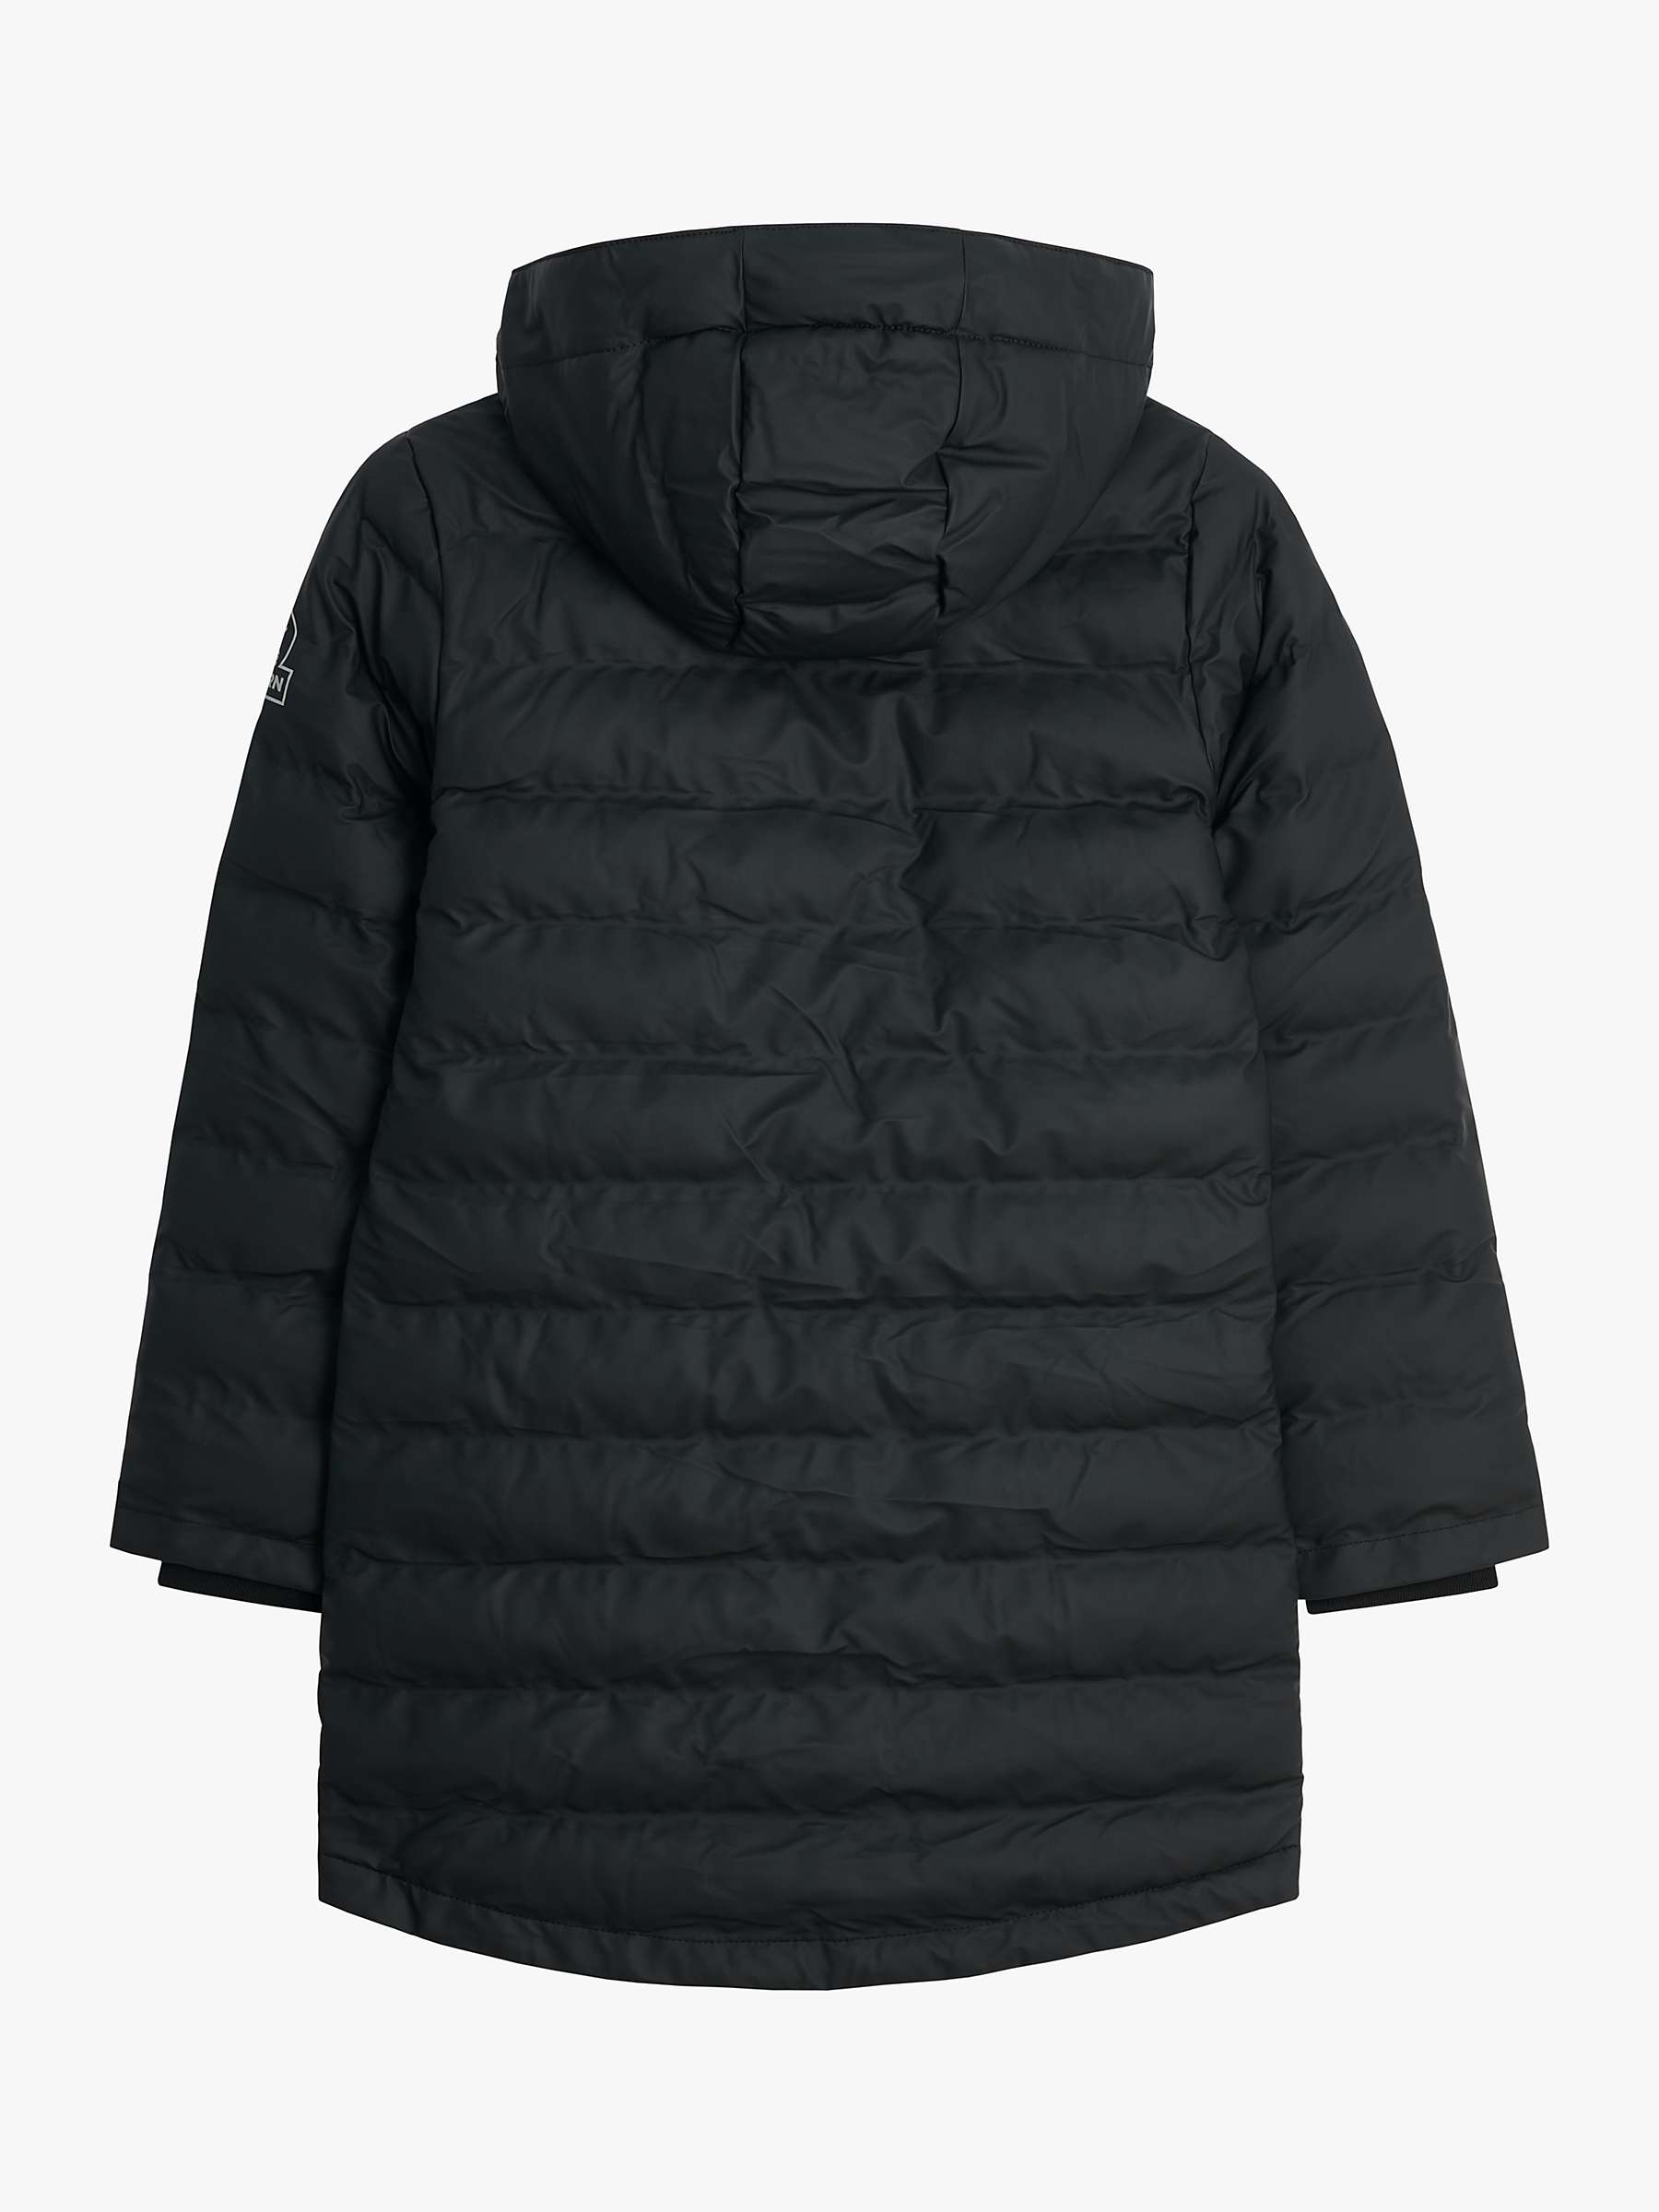 Tretorn Kids' Lumi Padded Jacket, Black at John Lewis & Partners